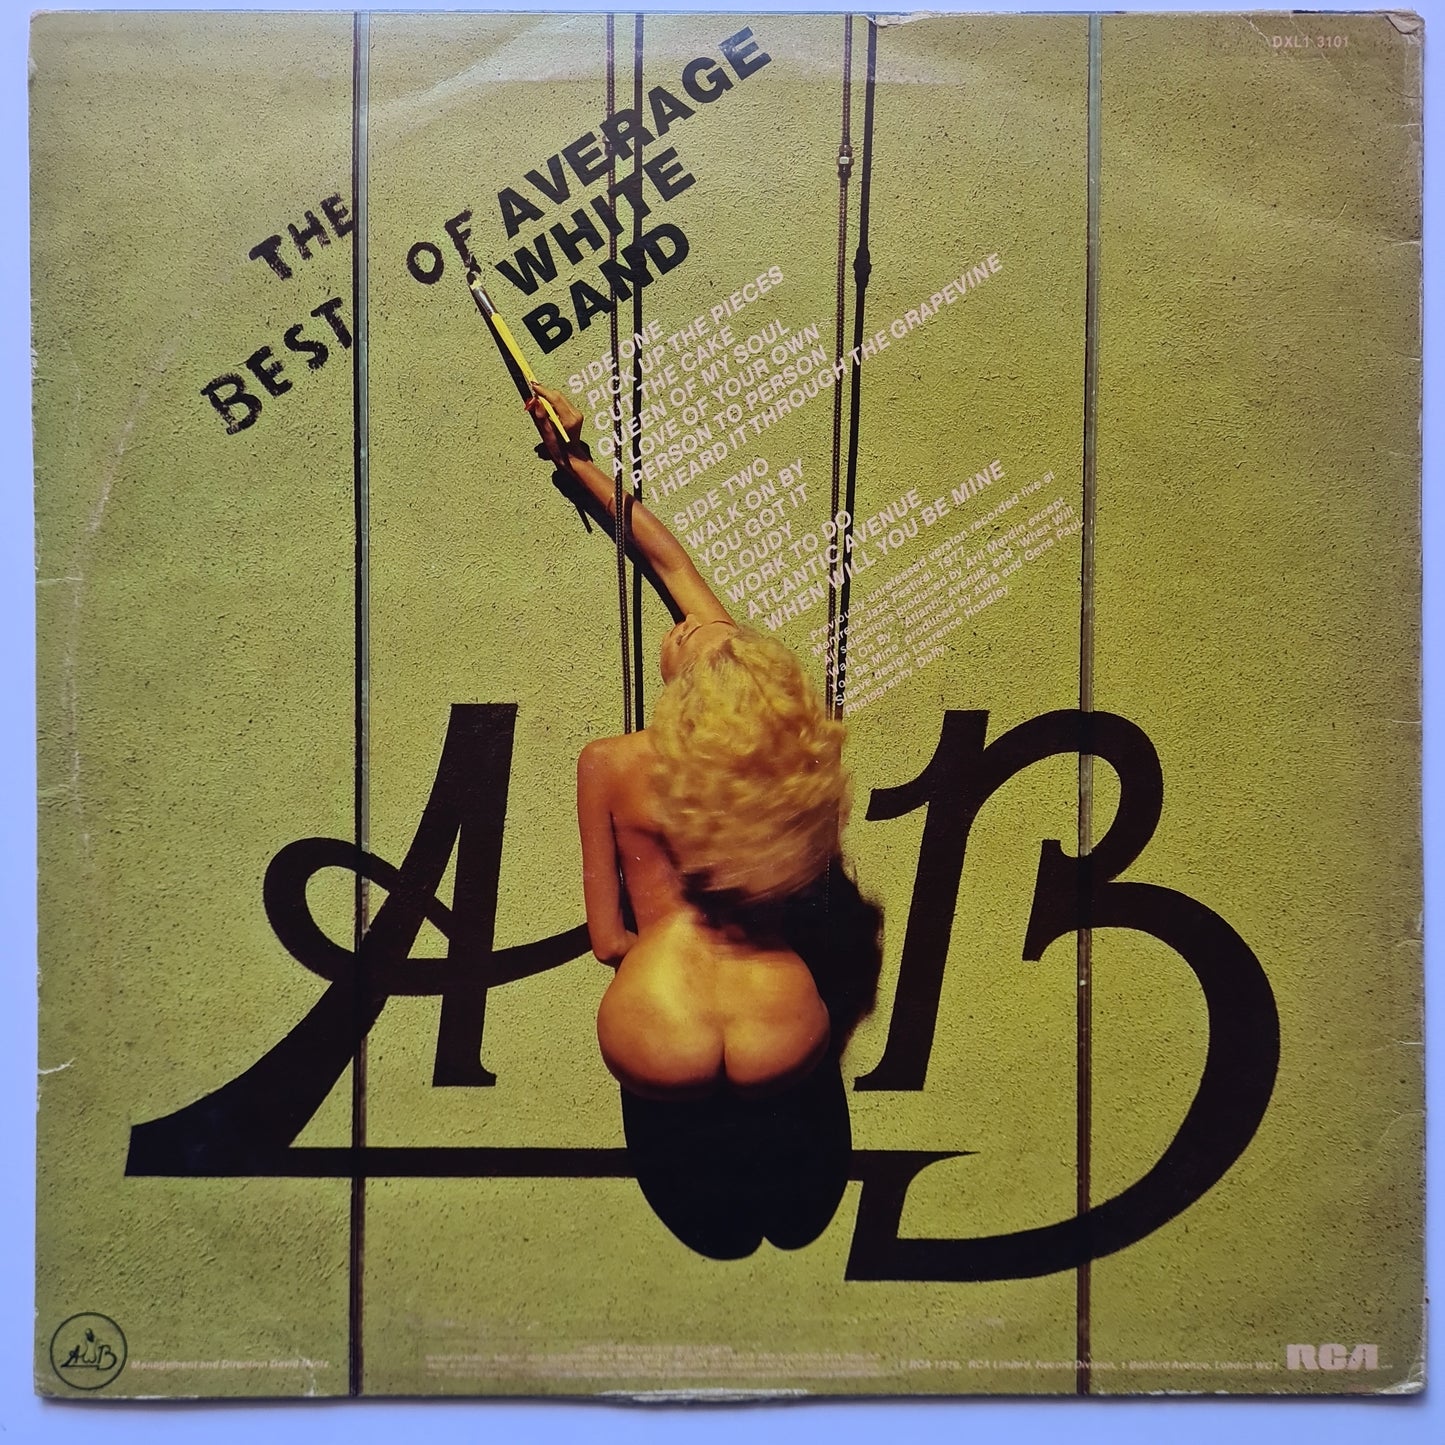 Average White Band – The Best Of AWB - 1979 - Vinyl Record